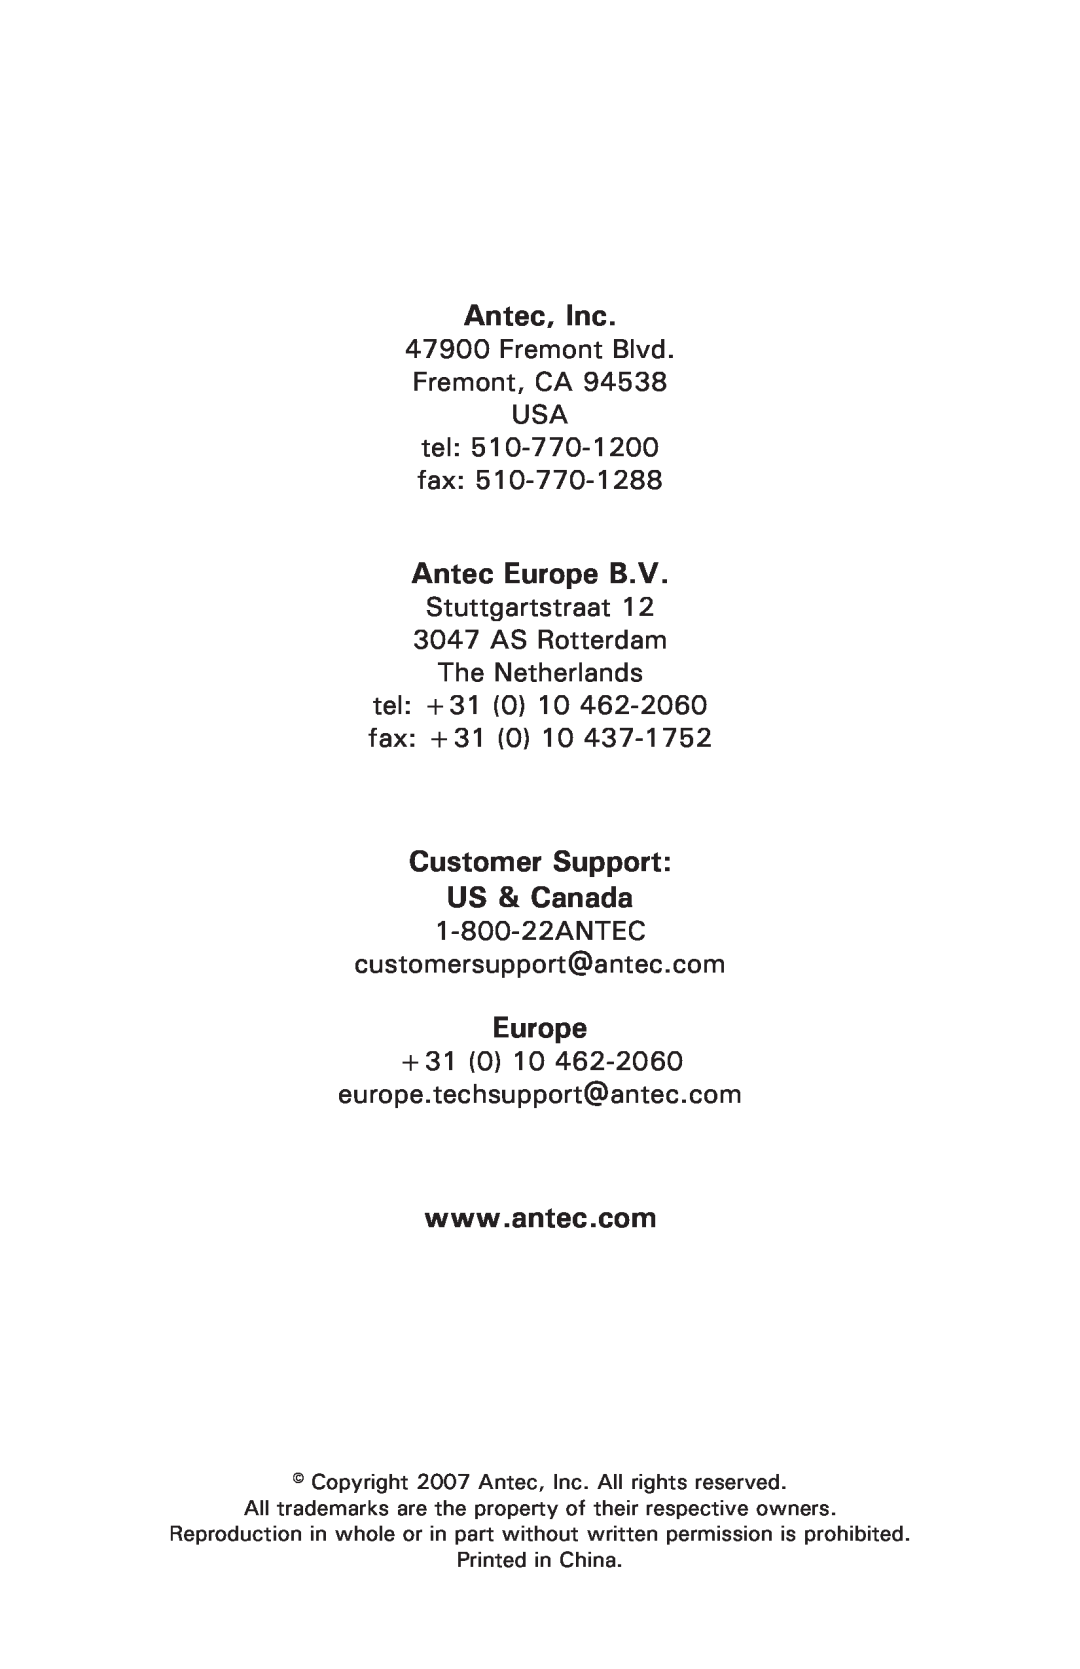 Antec Sonata II 500 user manual Antec, Inc, Antec Europe B.V, Customer Support US & Canada, fax +31 0 10 